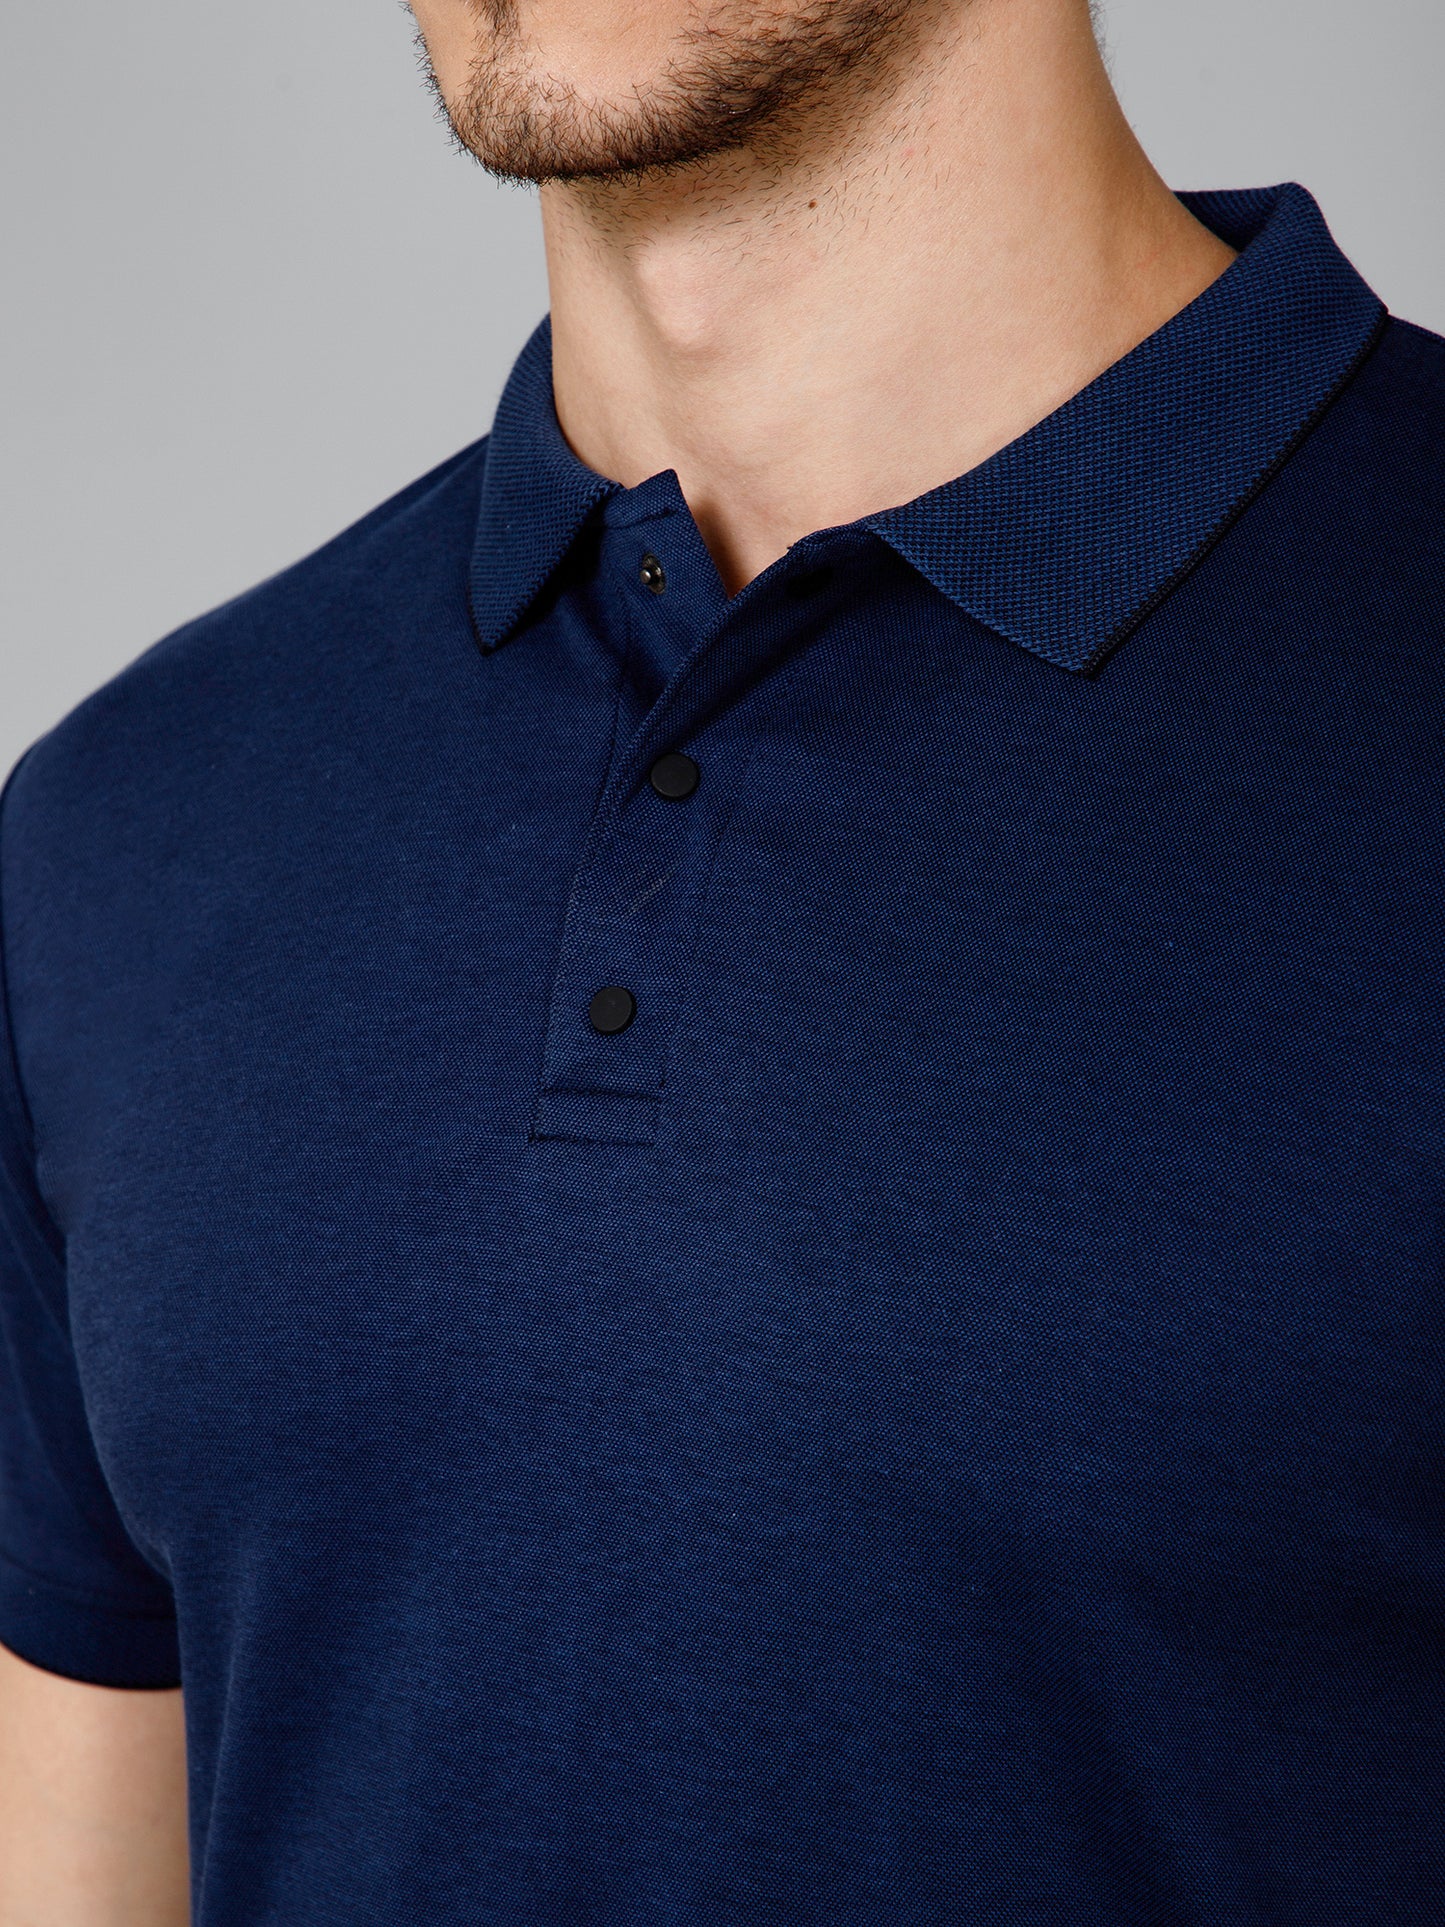 Cross Knit Navy Blue Polo T-shirt